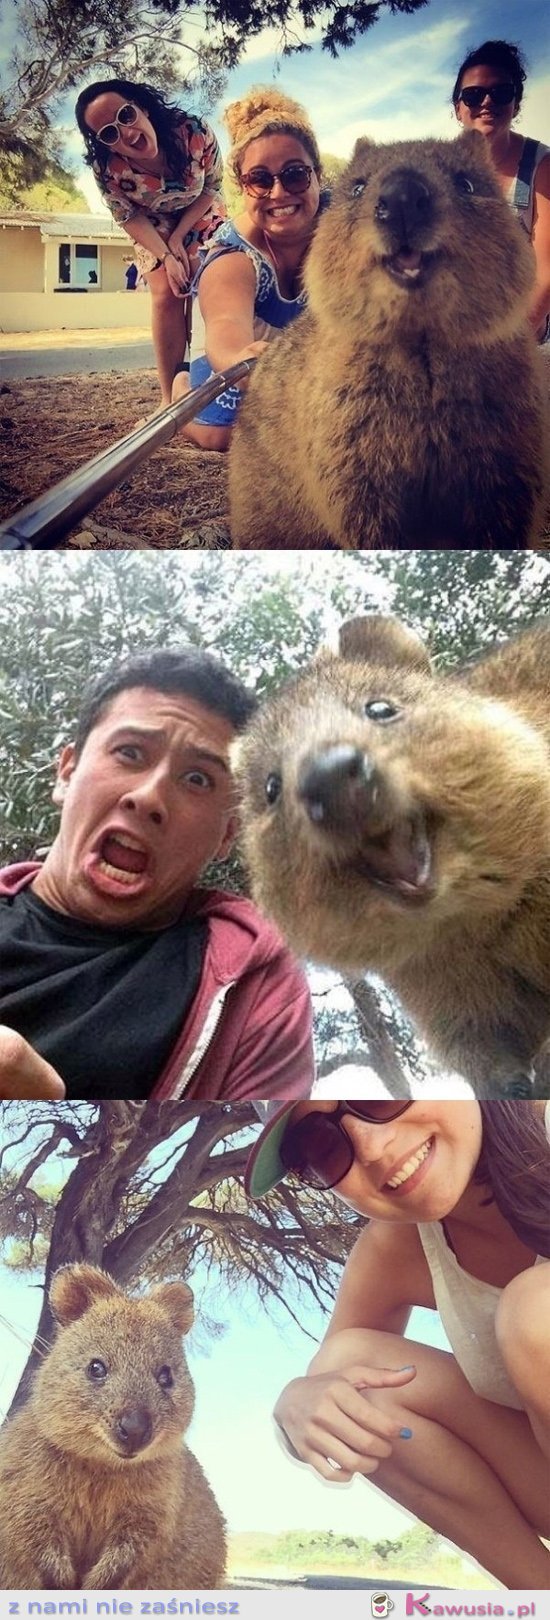 Moda na selfie w Australii